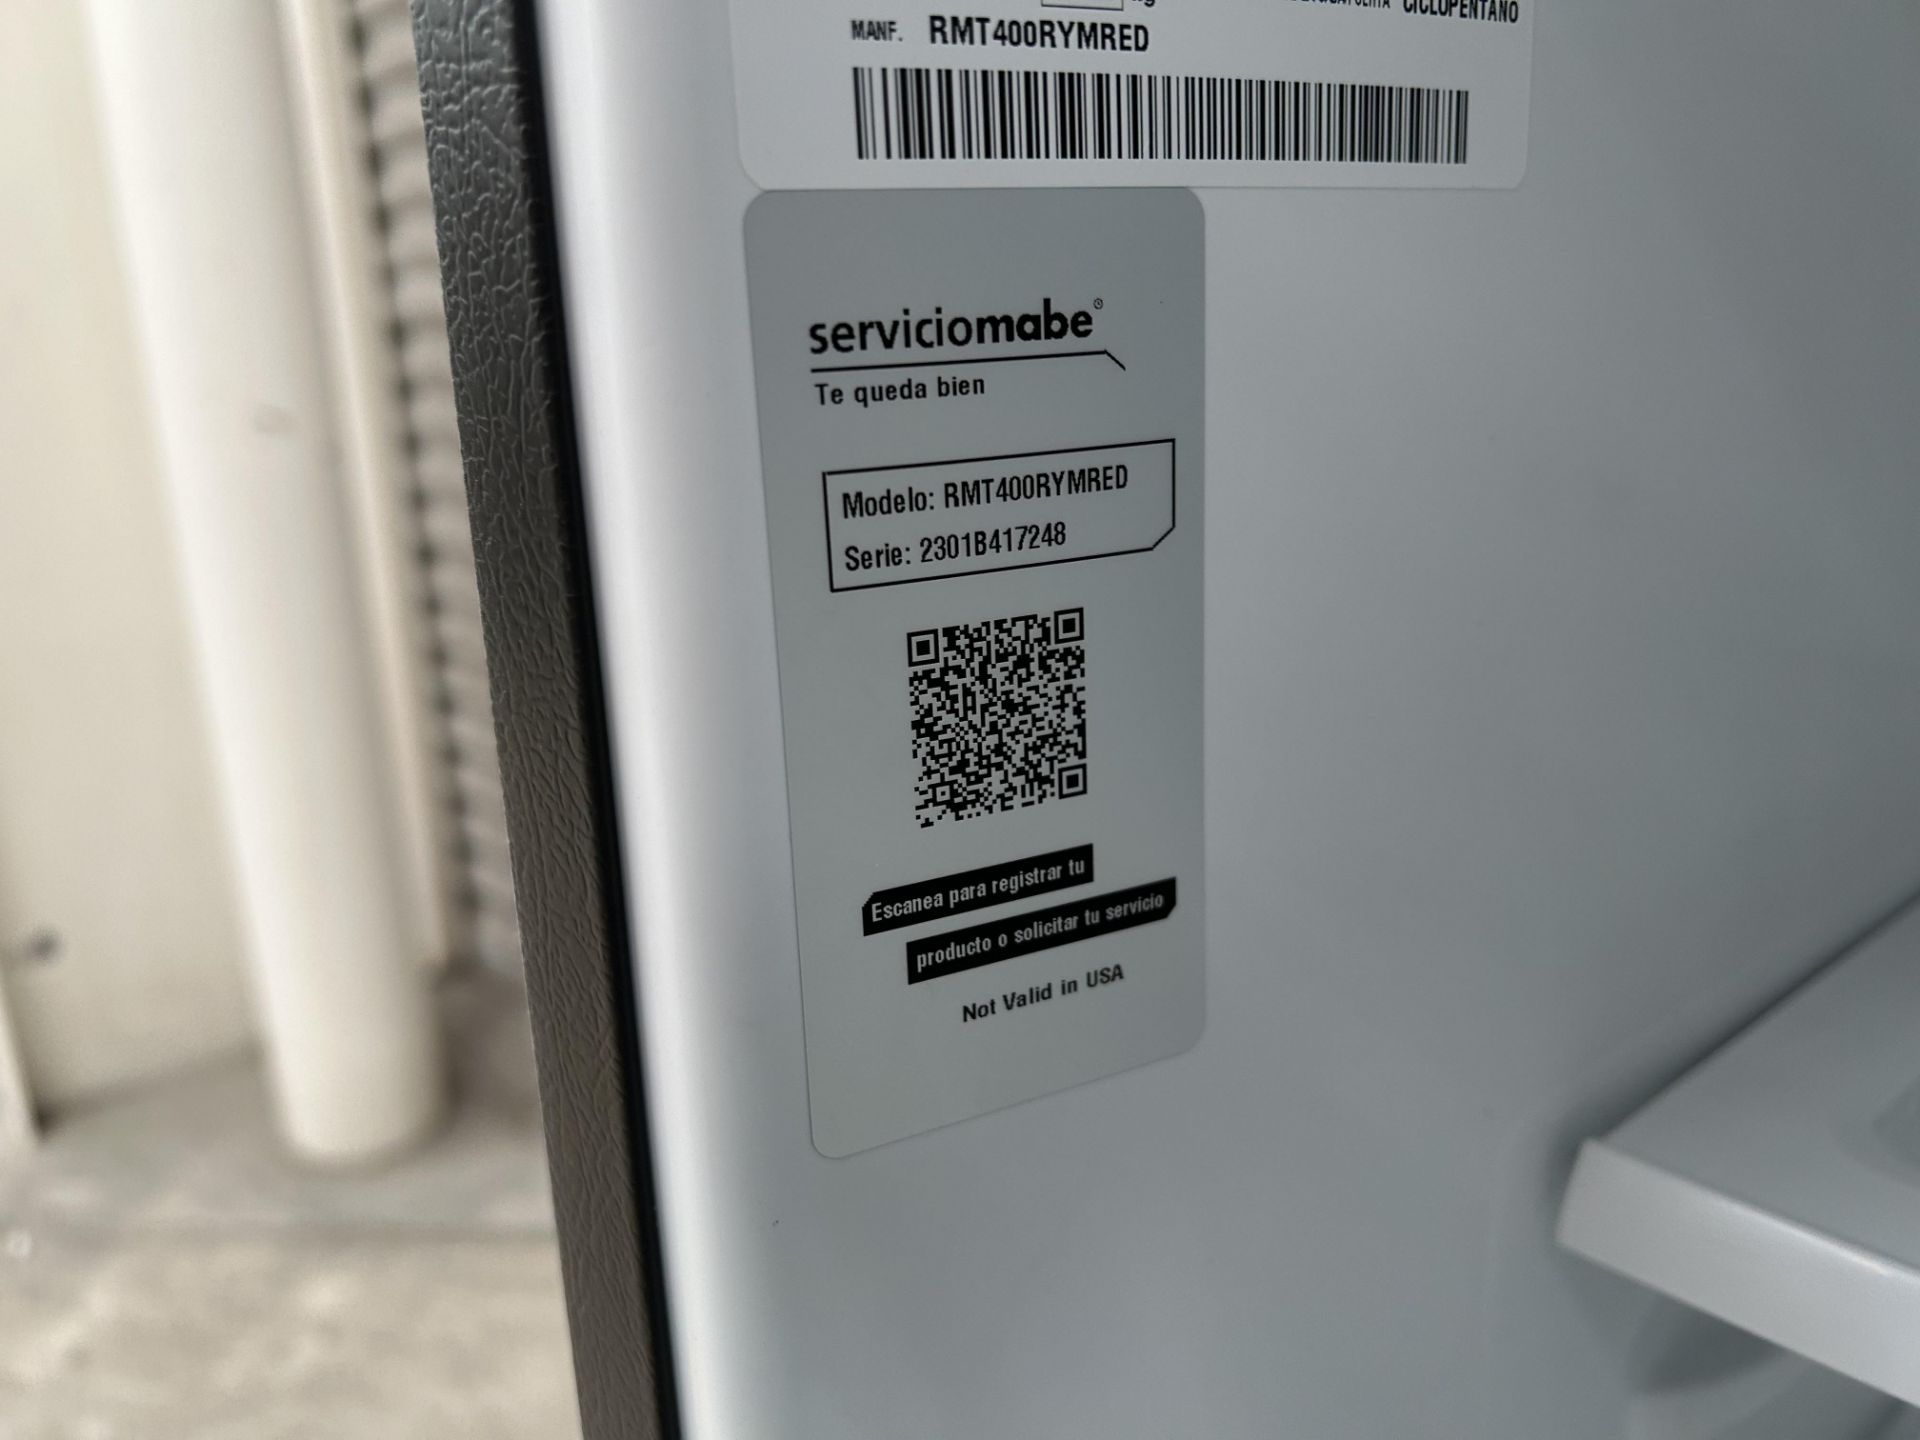 Refrigerador con dispensador de agua Marca MABE, Modelo RMT400RYMRE, Serie 17248, Color GRIS (Equip - Image 6 of 8